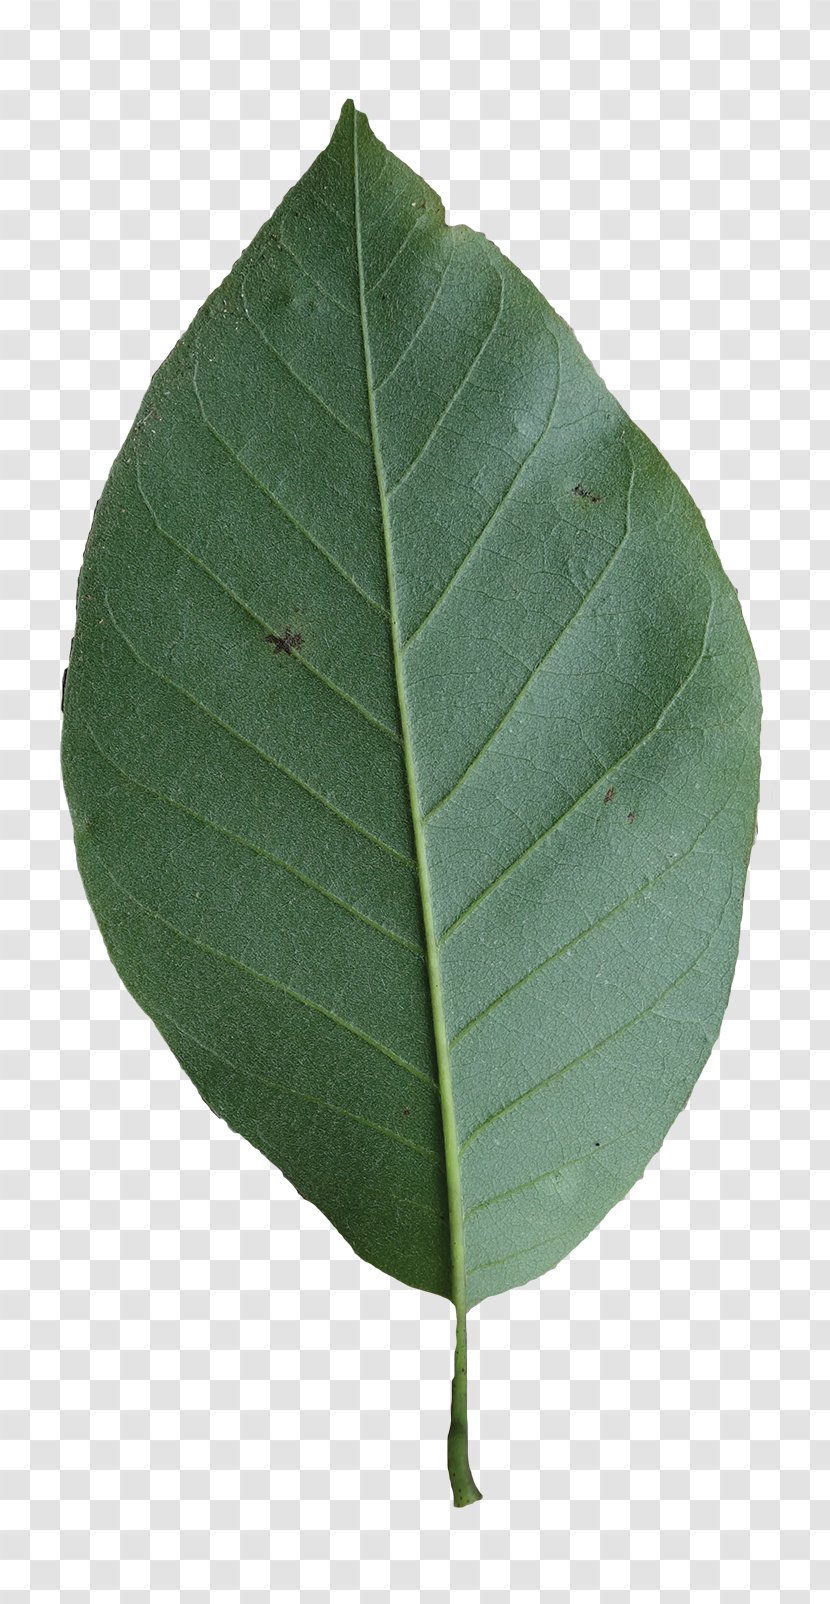 Leaf - Tacamahac - Magnolia Tree Leaves Turning Yellow Transparent PNG